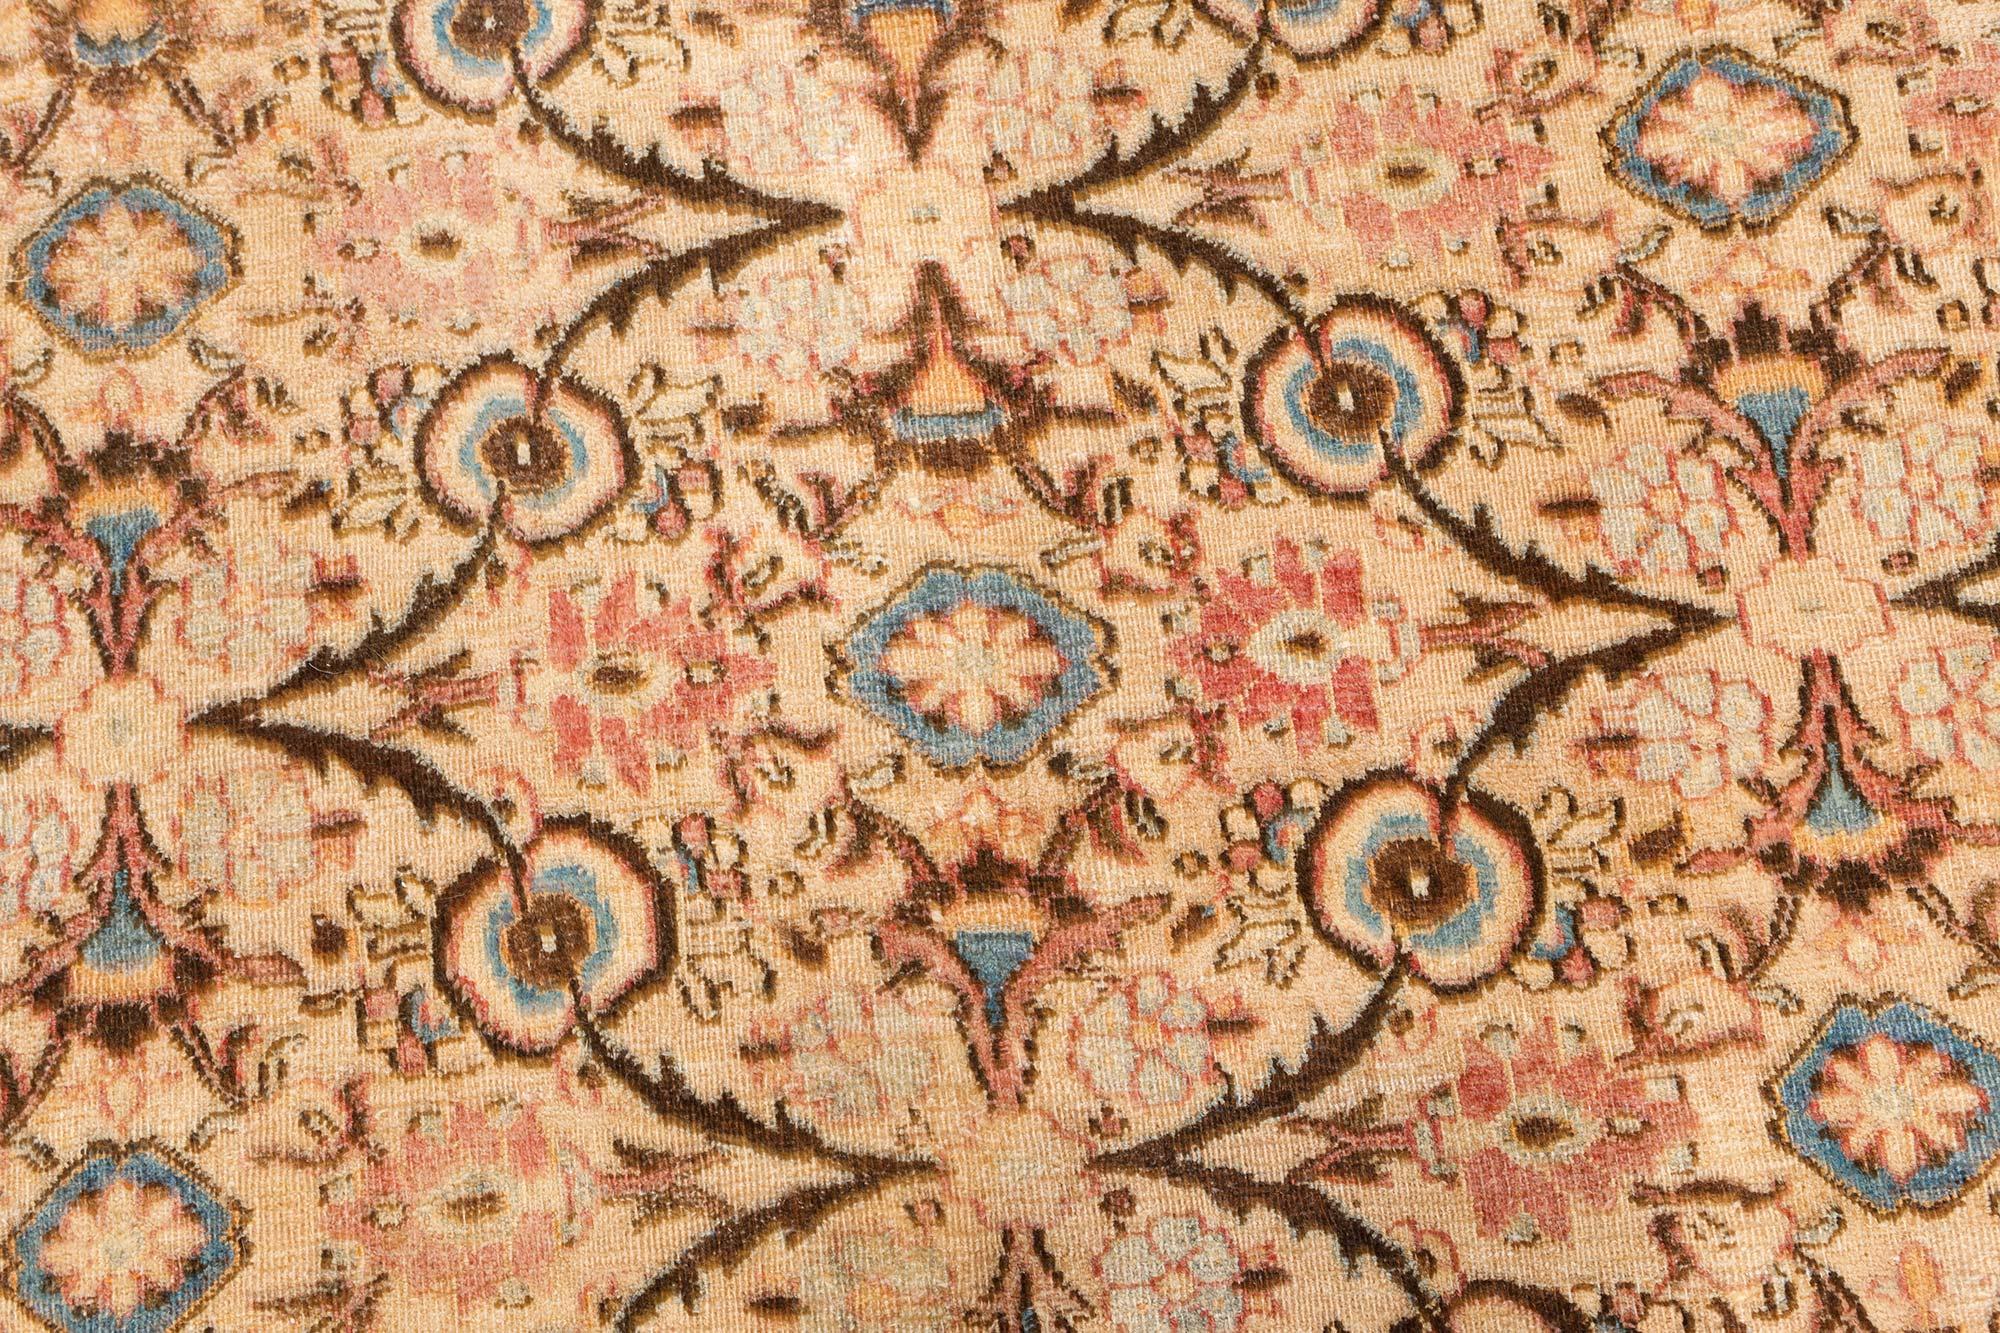 Fine Antique Persian Meshad handmade wool rug.
Size: 10'9